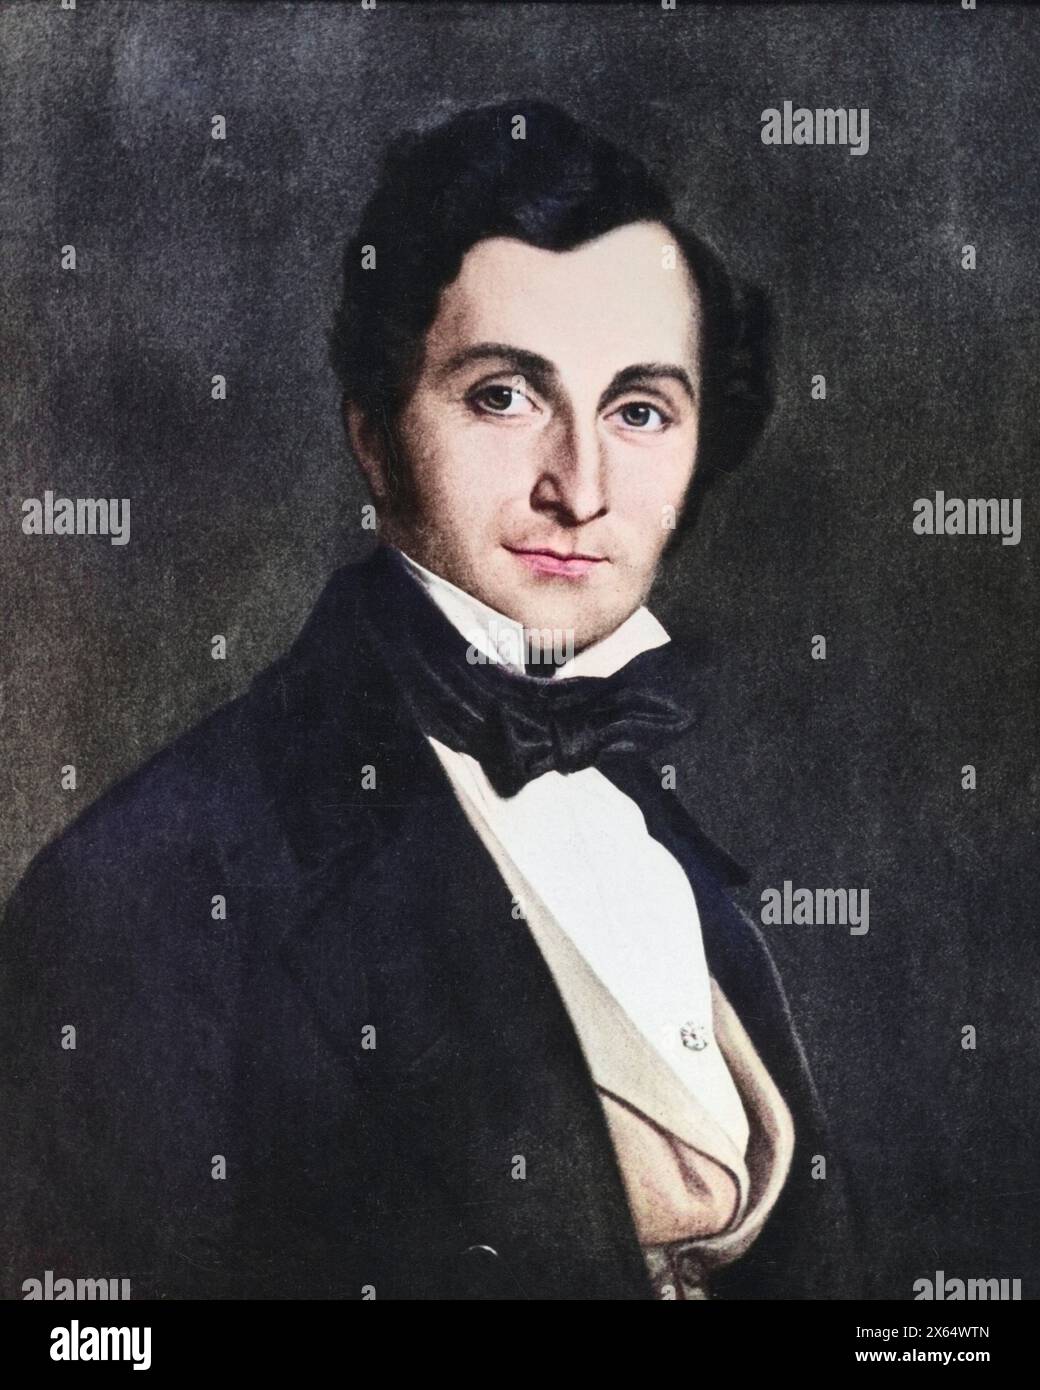 Lortzing, Albert, 23.10.1801 - 21.1,1851, deutscher Komponist, Porträt, ADDITIONAL-RIGHTS-CLEARANCE-INFO-NOT-AVAILABLE Stockfoto